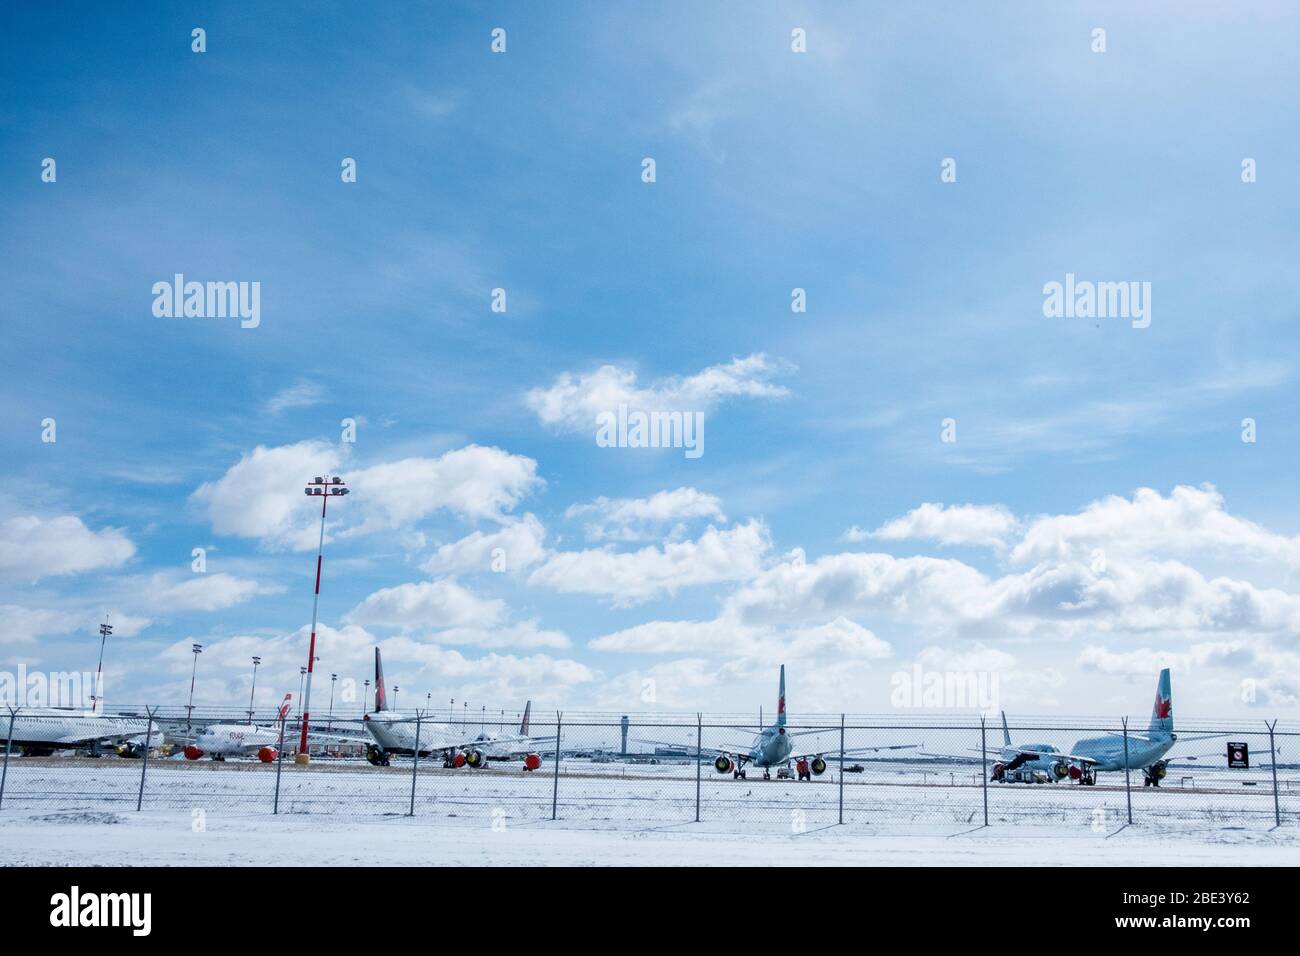 11 avril 2020 - Calgary (Alberta), Canada - avions de ligne garés à l'aéroport international de Calgary - pandémie de Covid-19 Banque D'Images